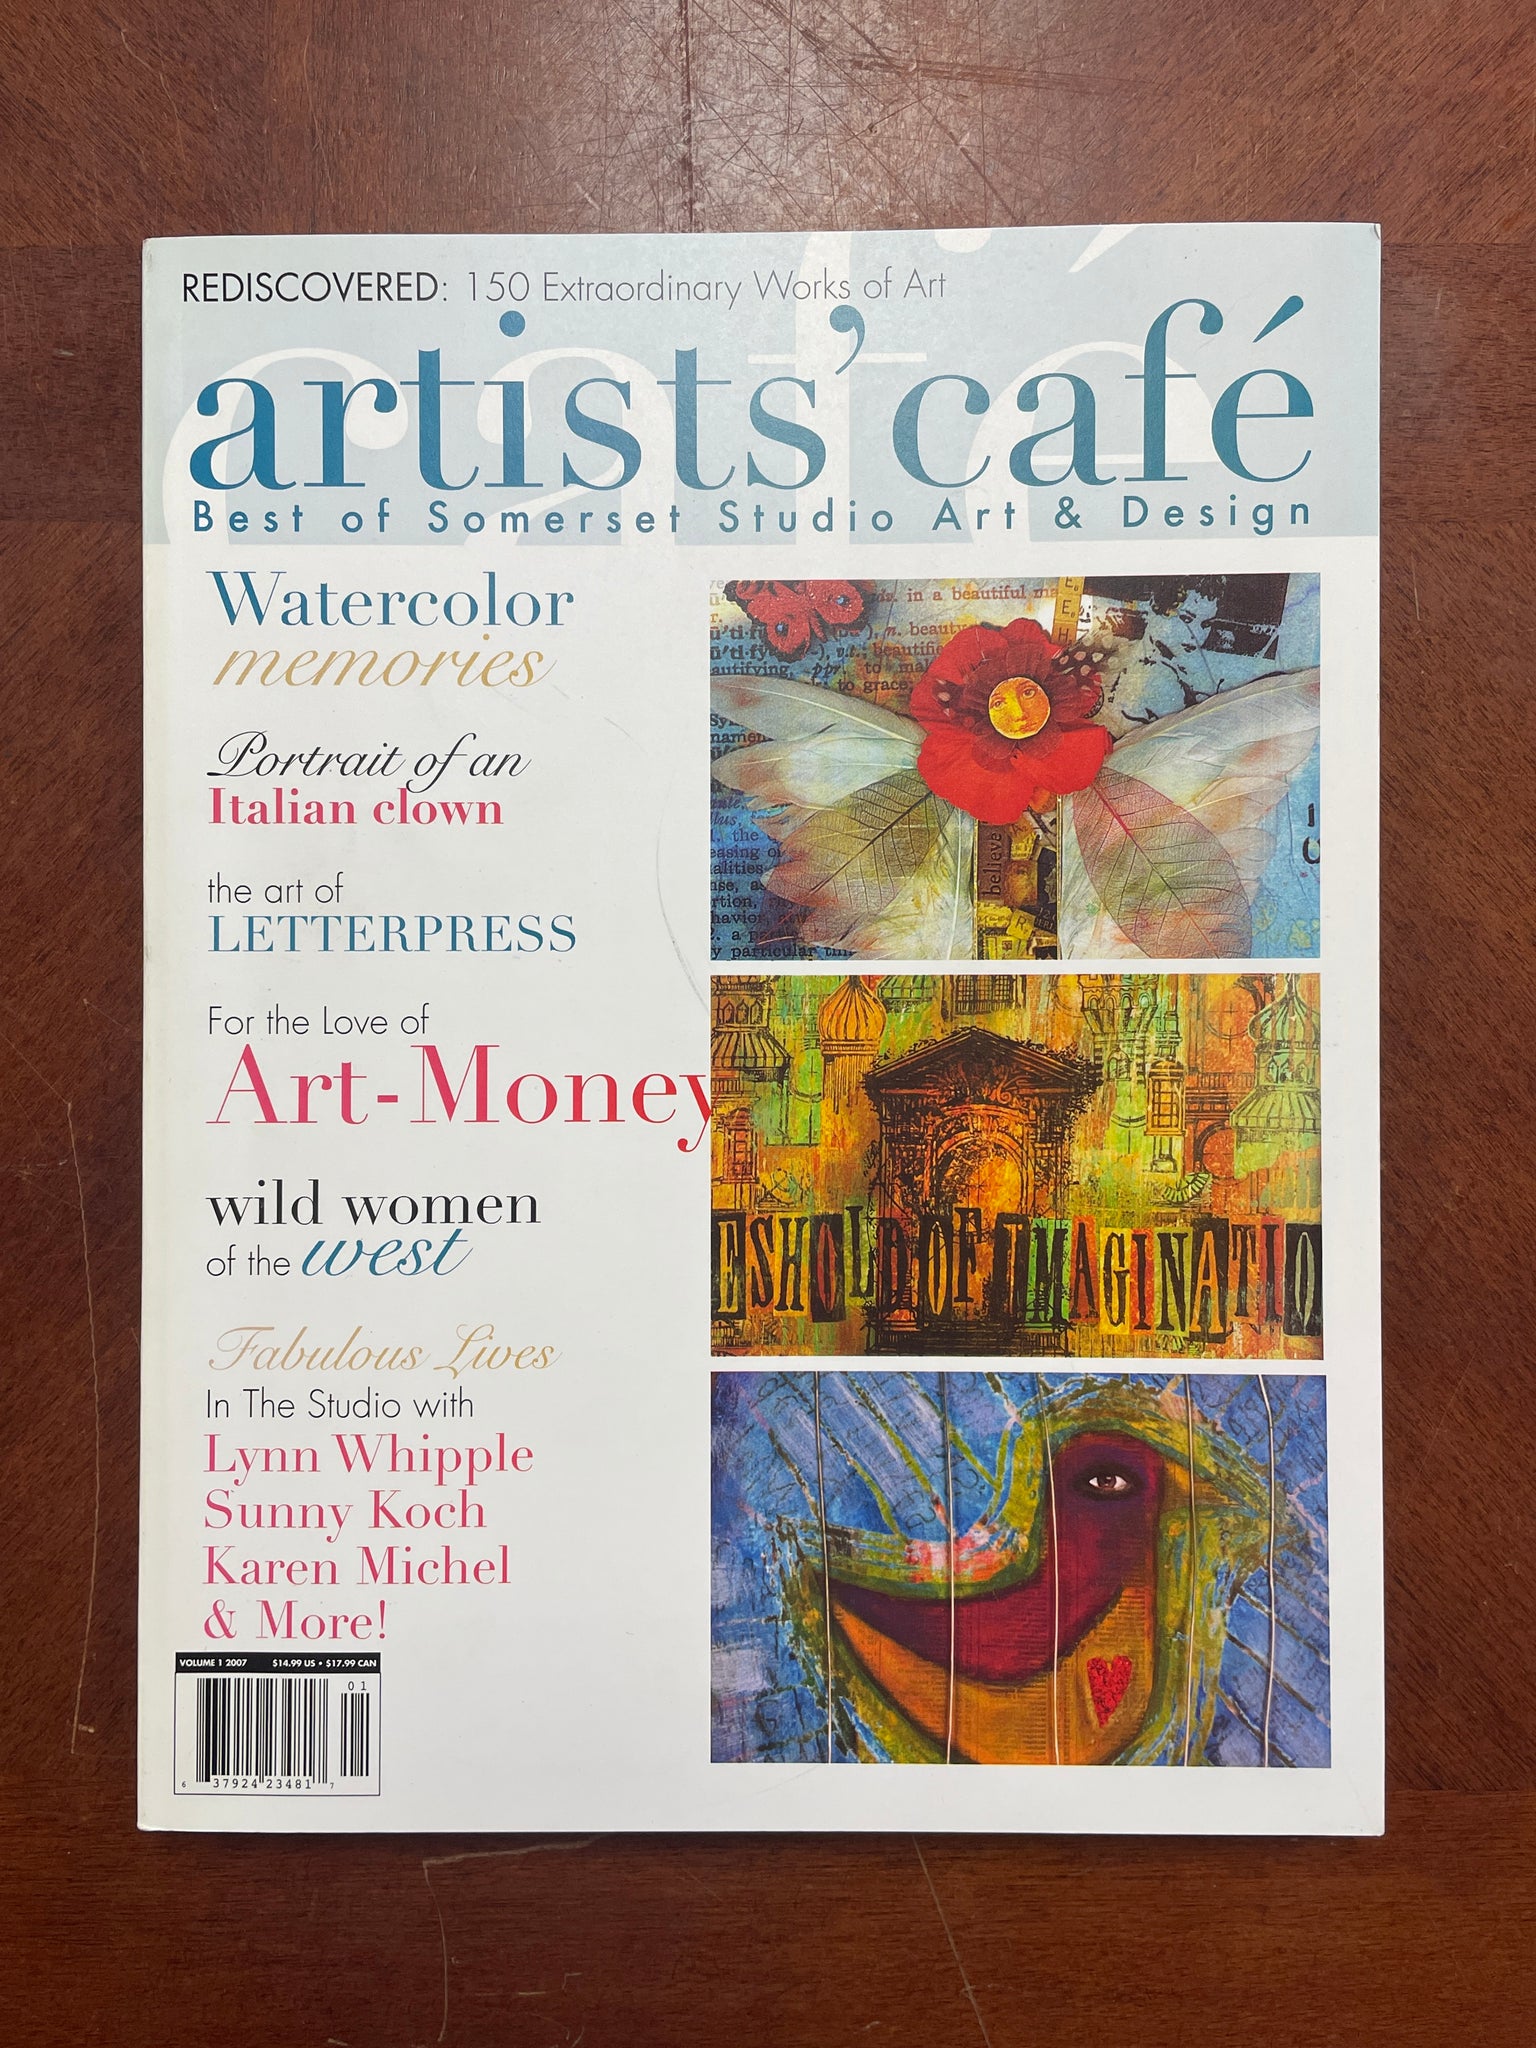 2007 Arts & Crafts Book - "Artists' Café"